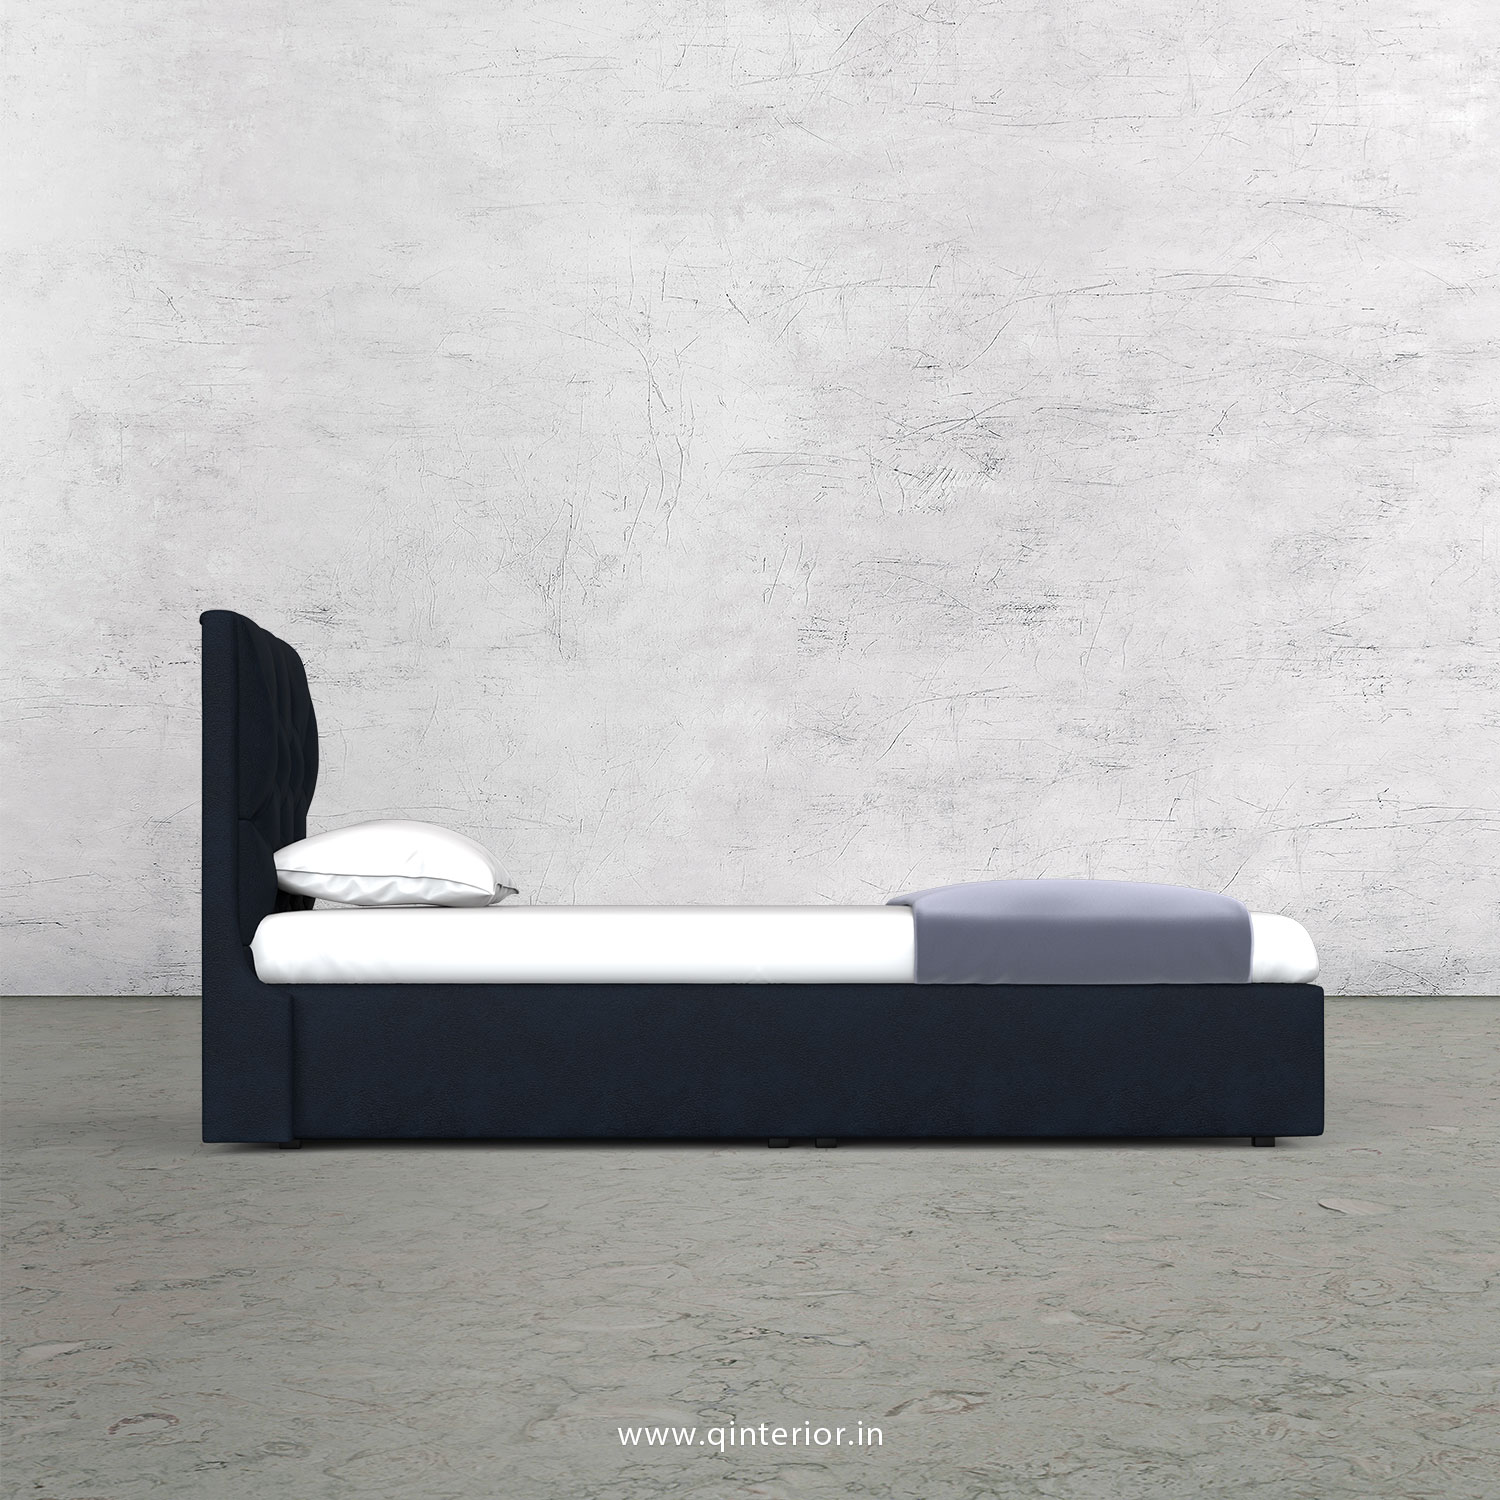 Scorpius Single Bed in Fab Leather Fabric - SBD009 FL05